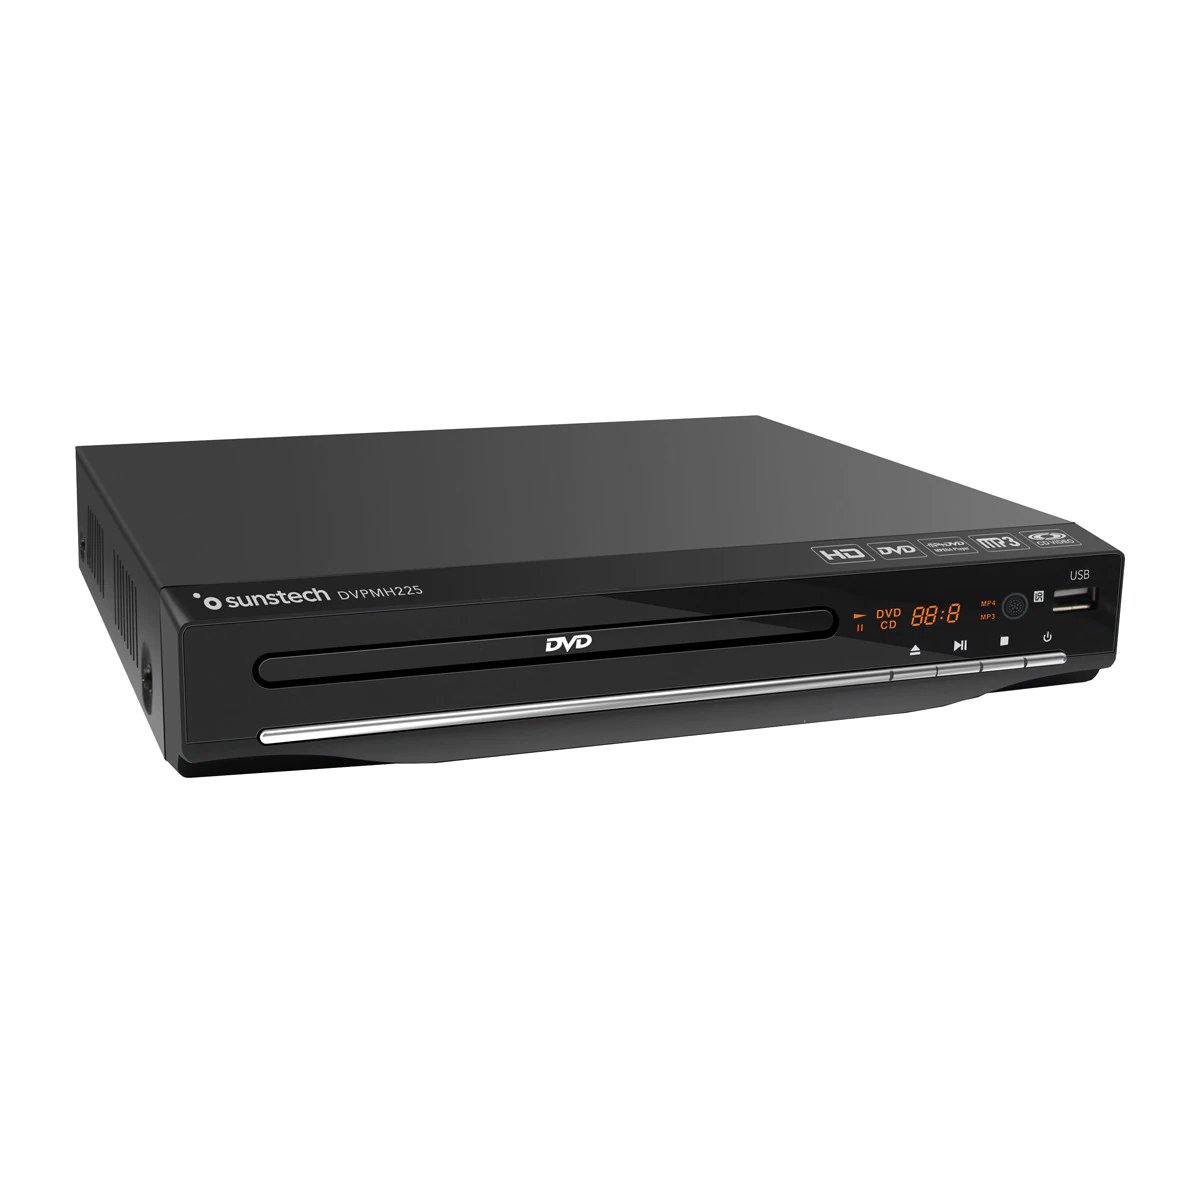 Reproductor DVD Sunstech DVPMH225BK compacto con USB